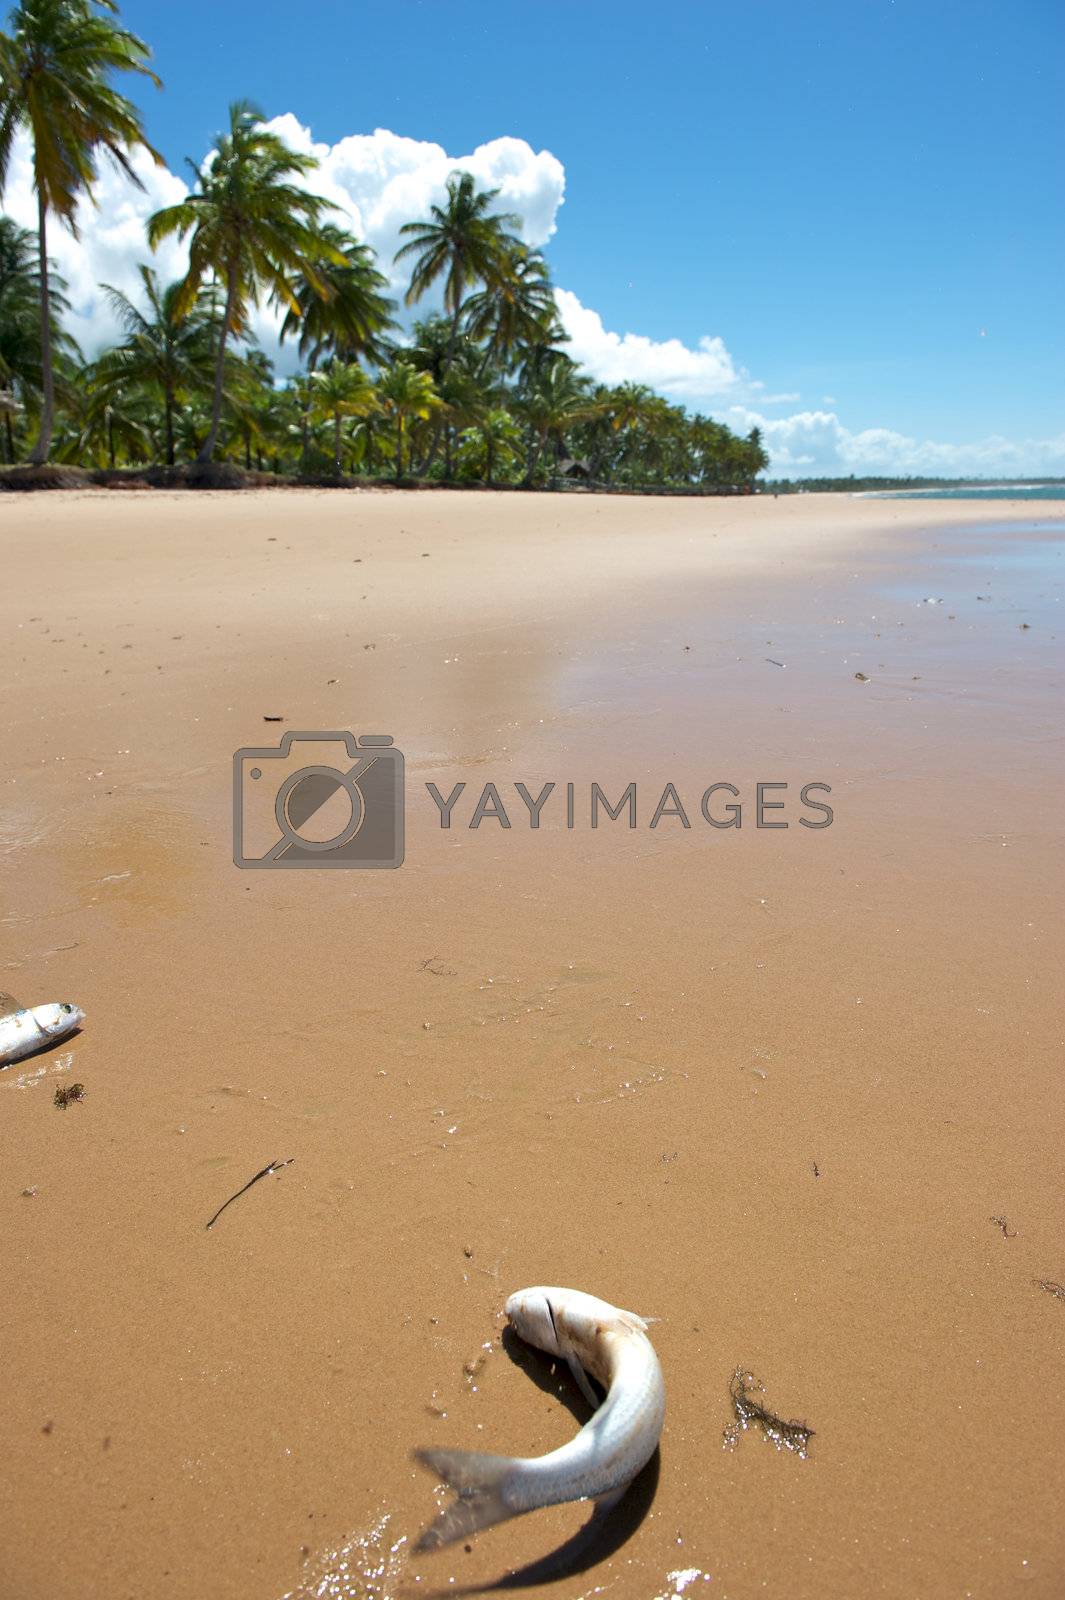 Royalty free image of Paradise Brazilian Beach by swimnews